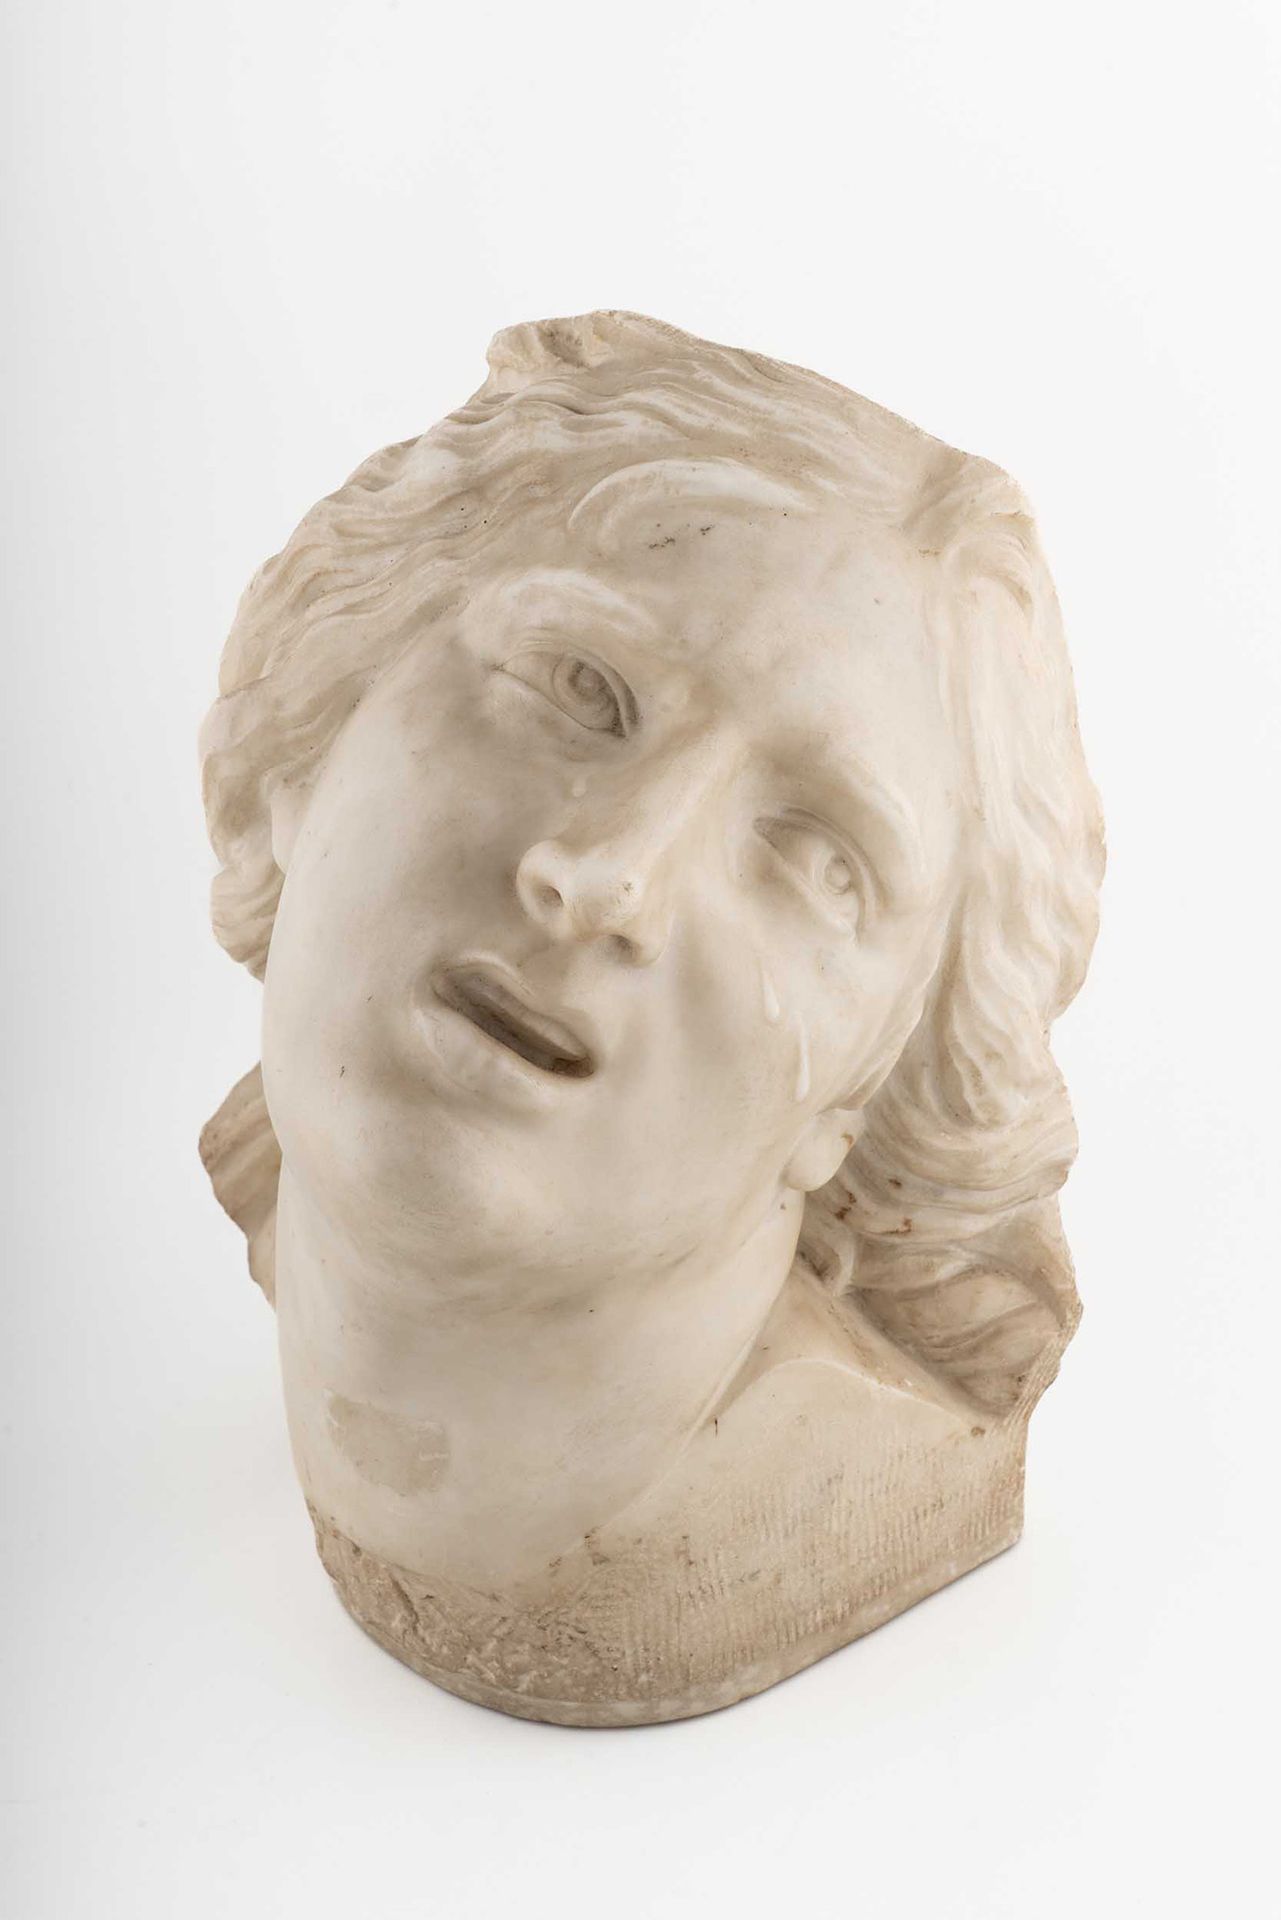 Null 普罗赛尔宾的头像，由吉安-洛伦佐-贝尔尼尼创作

18世纪

白色雕像大理石雕塑

h cm 35

大理石复制的普罗赛尔宾头像，出自吉安-洛伦佐-贝&hellip;